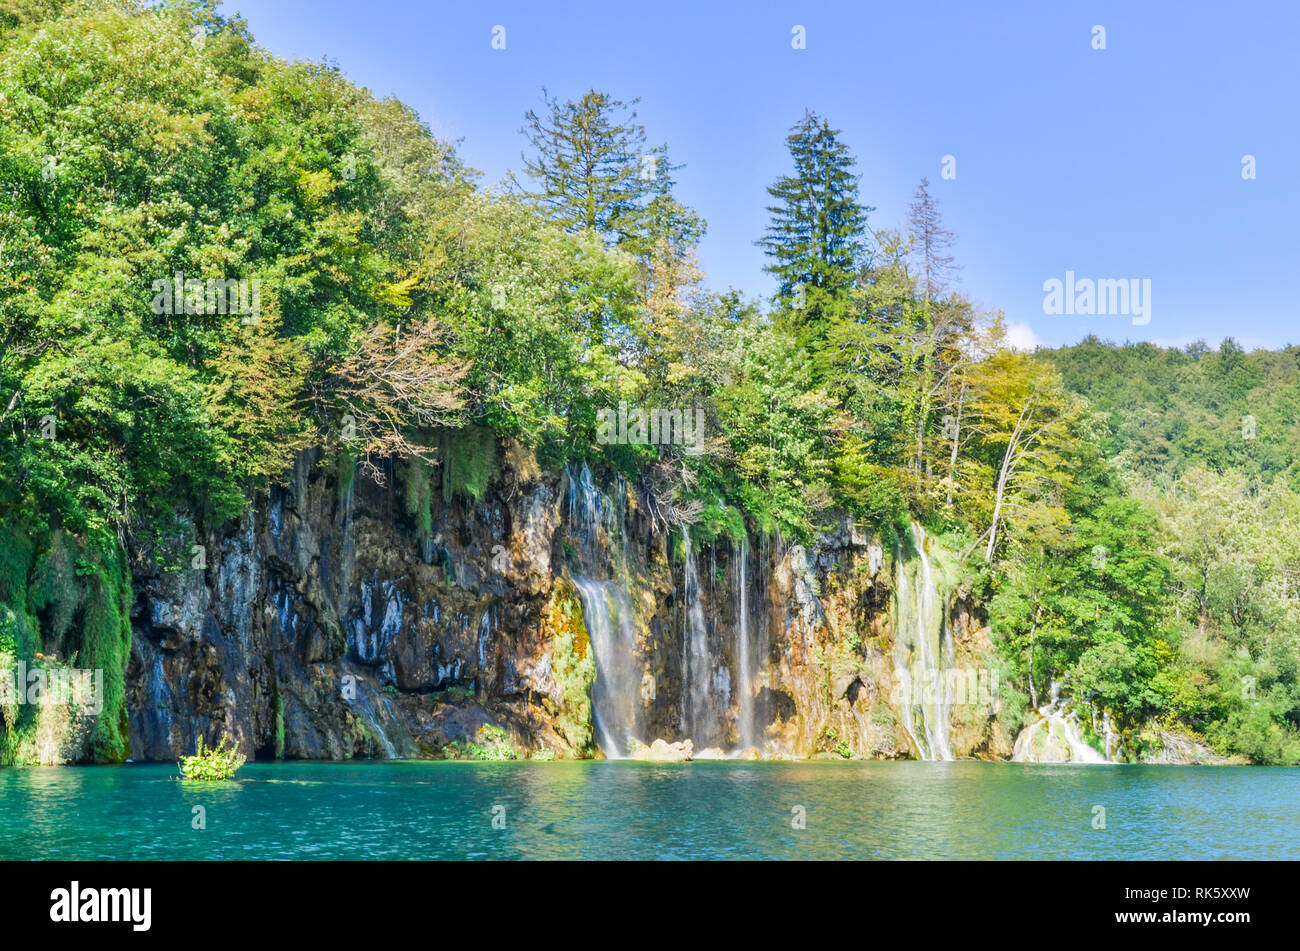 Stunning nature of the Plitvice Lakes National Park (UNESCO World Heritage Centre) in Croatia: waterfalls, wildlife, bridges, tourists ... Stock Photo